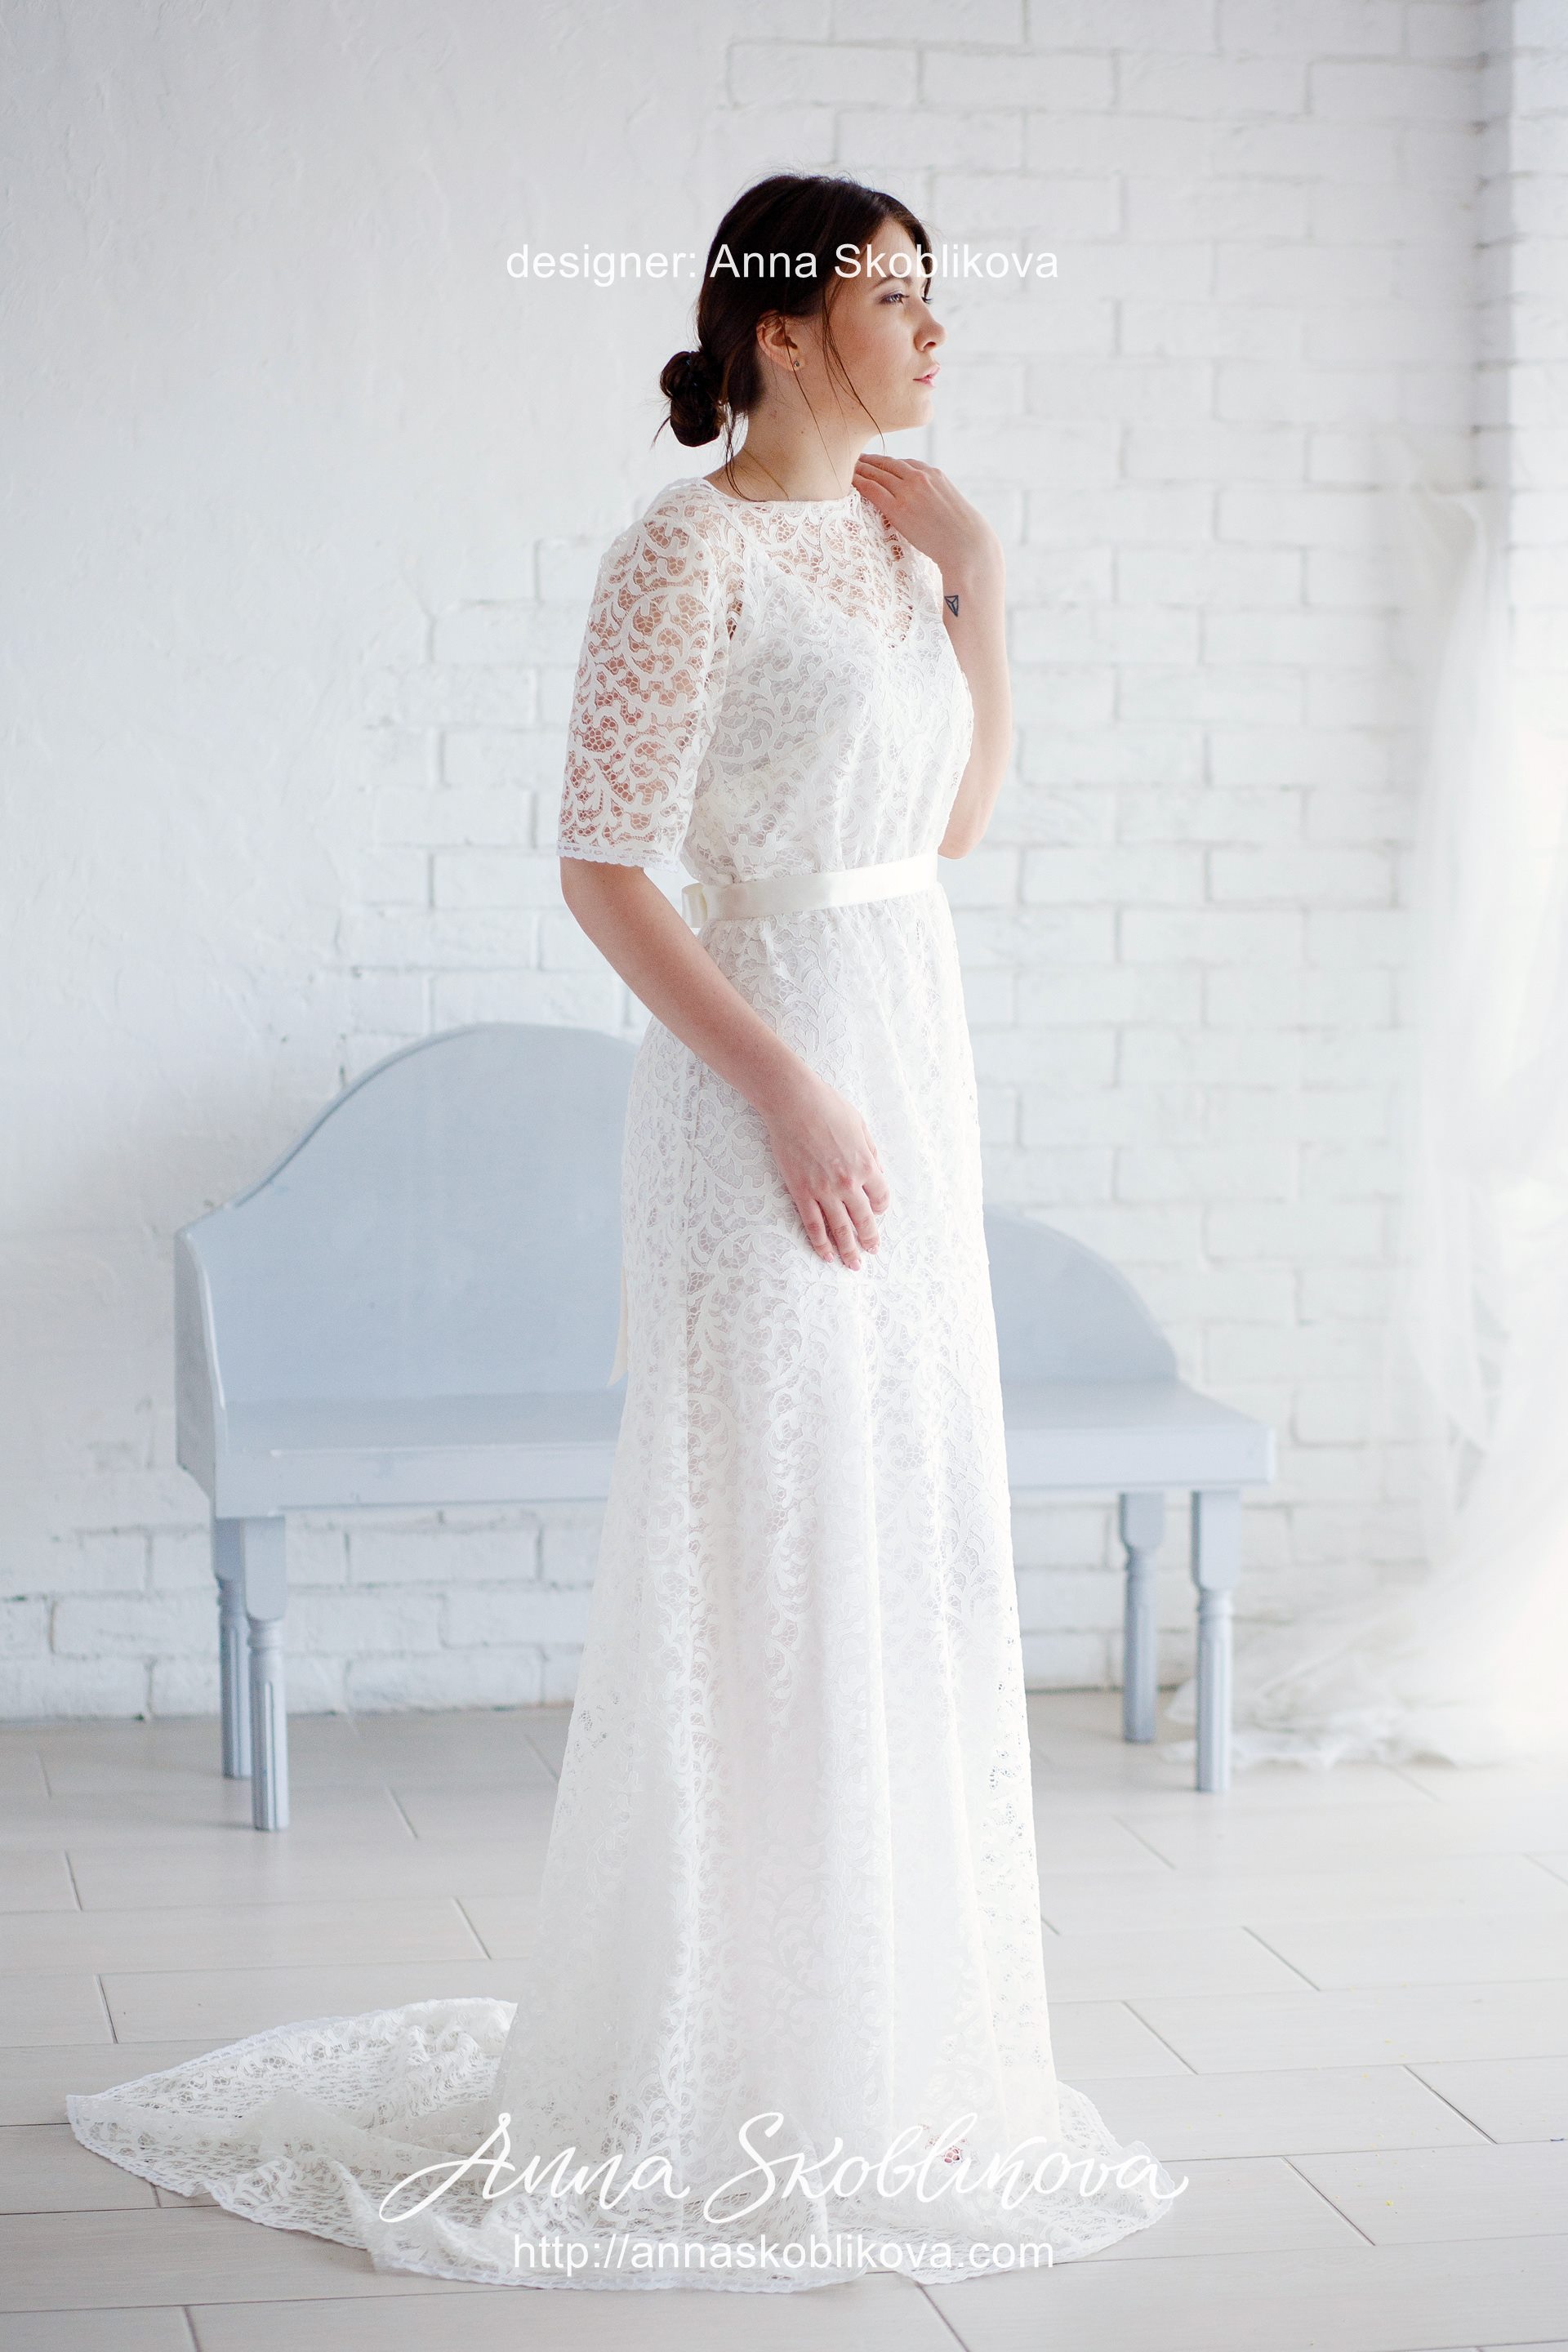 Delicate two-piece wedding dress | Wedding Dresses & Gowns by Anna Skoblikova